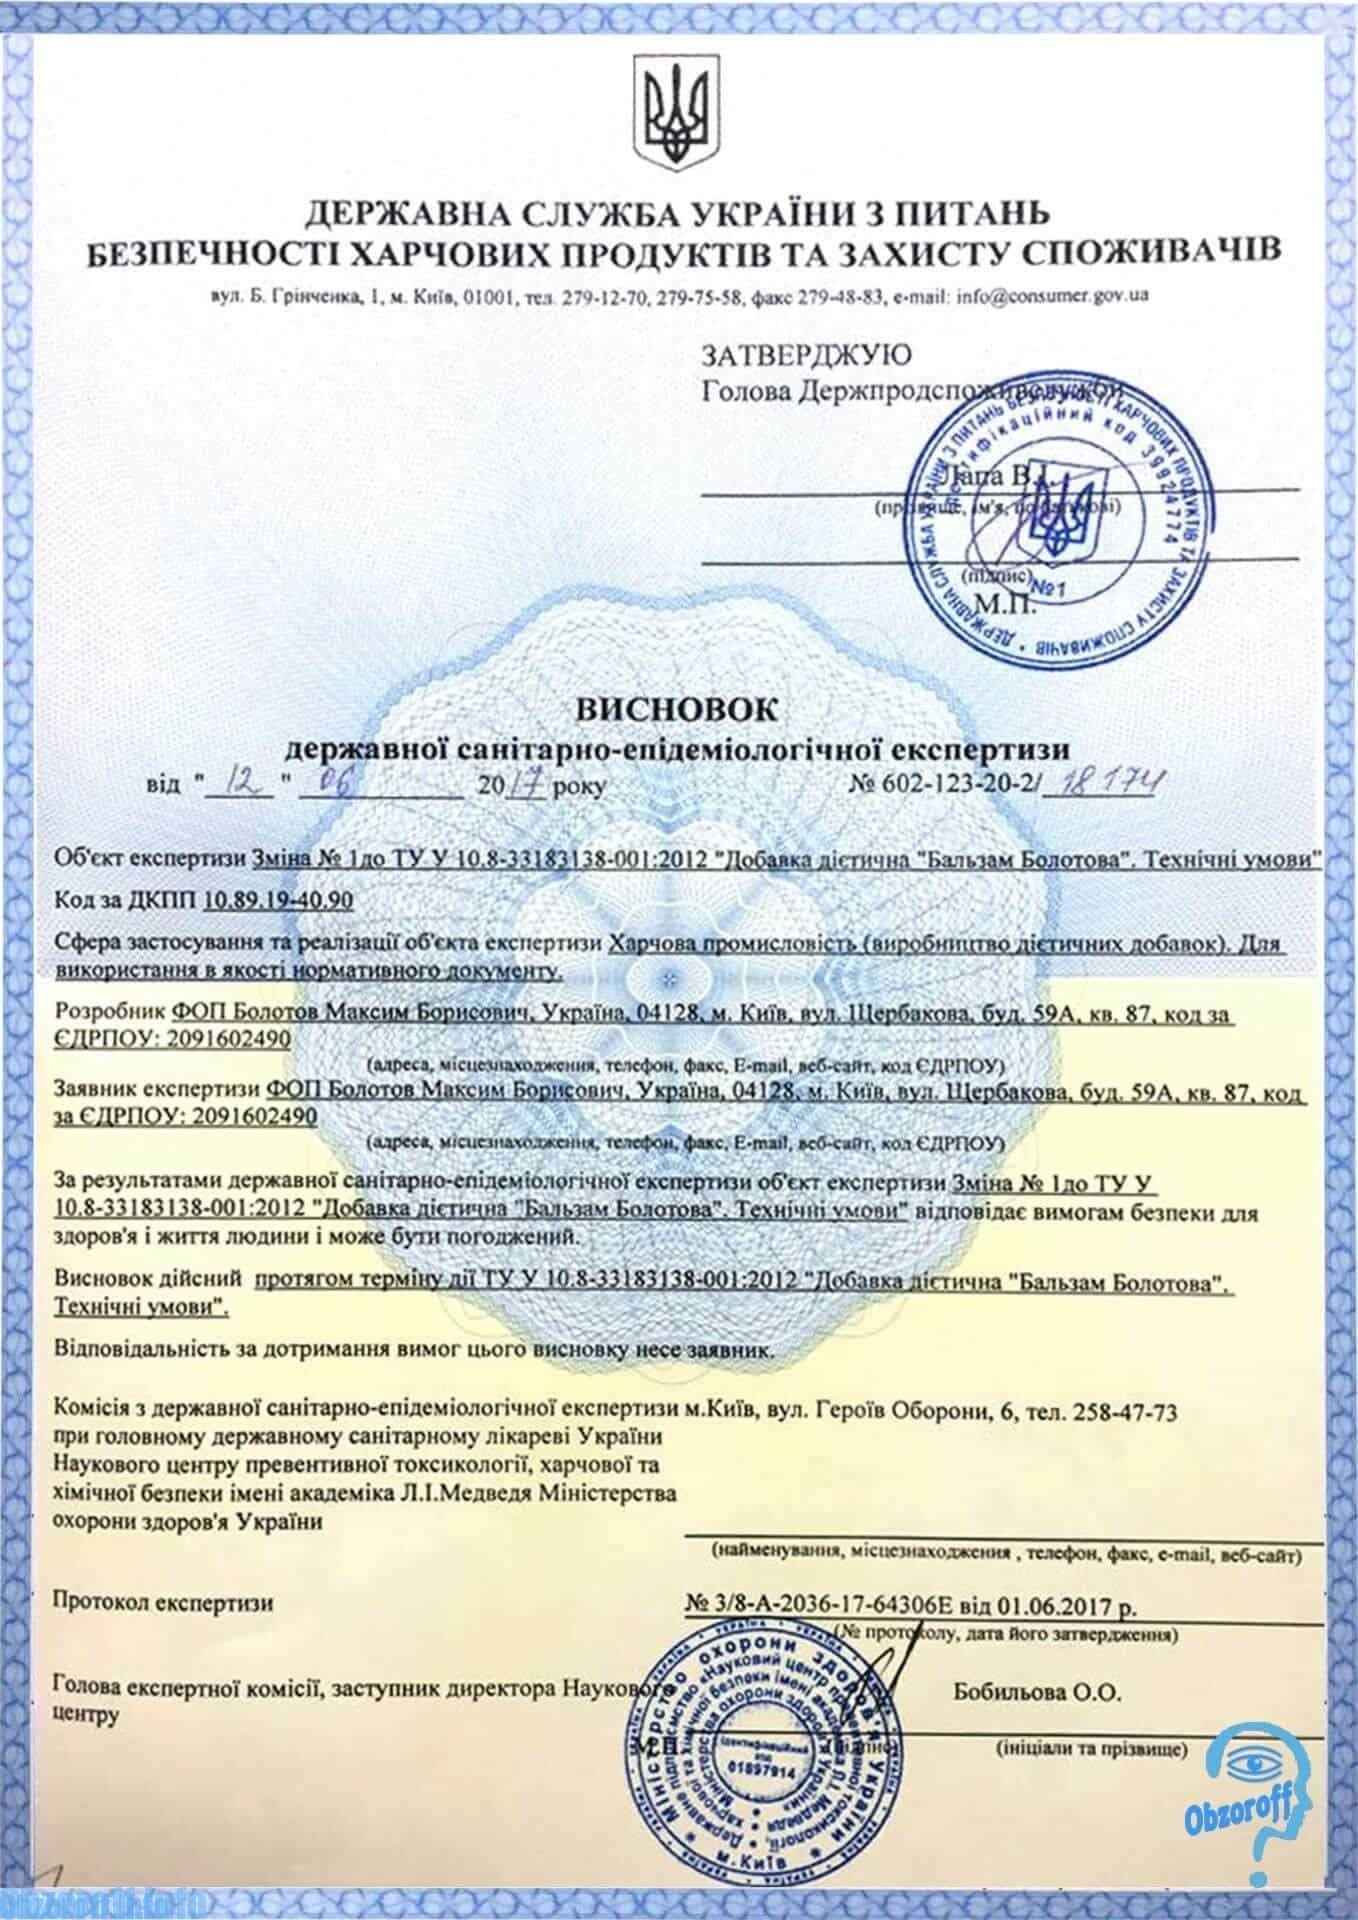 Certifikat balzam Bolotov